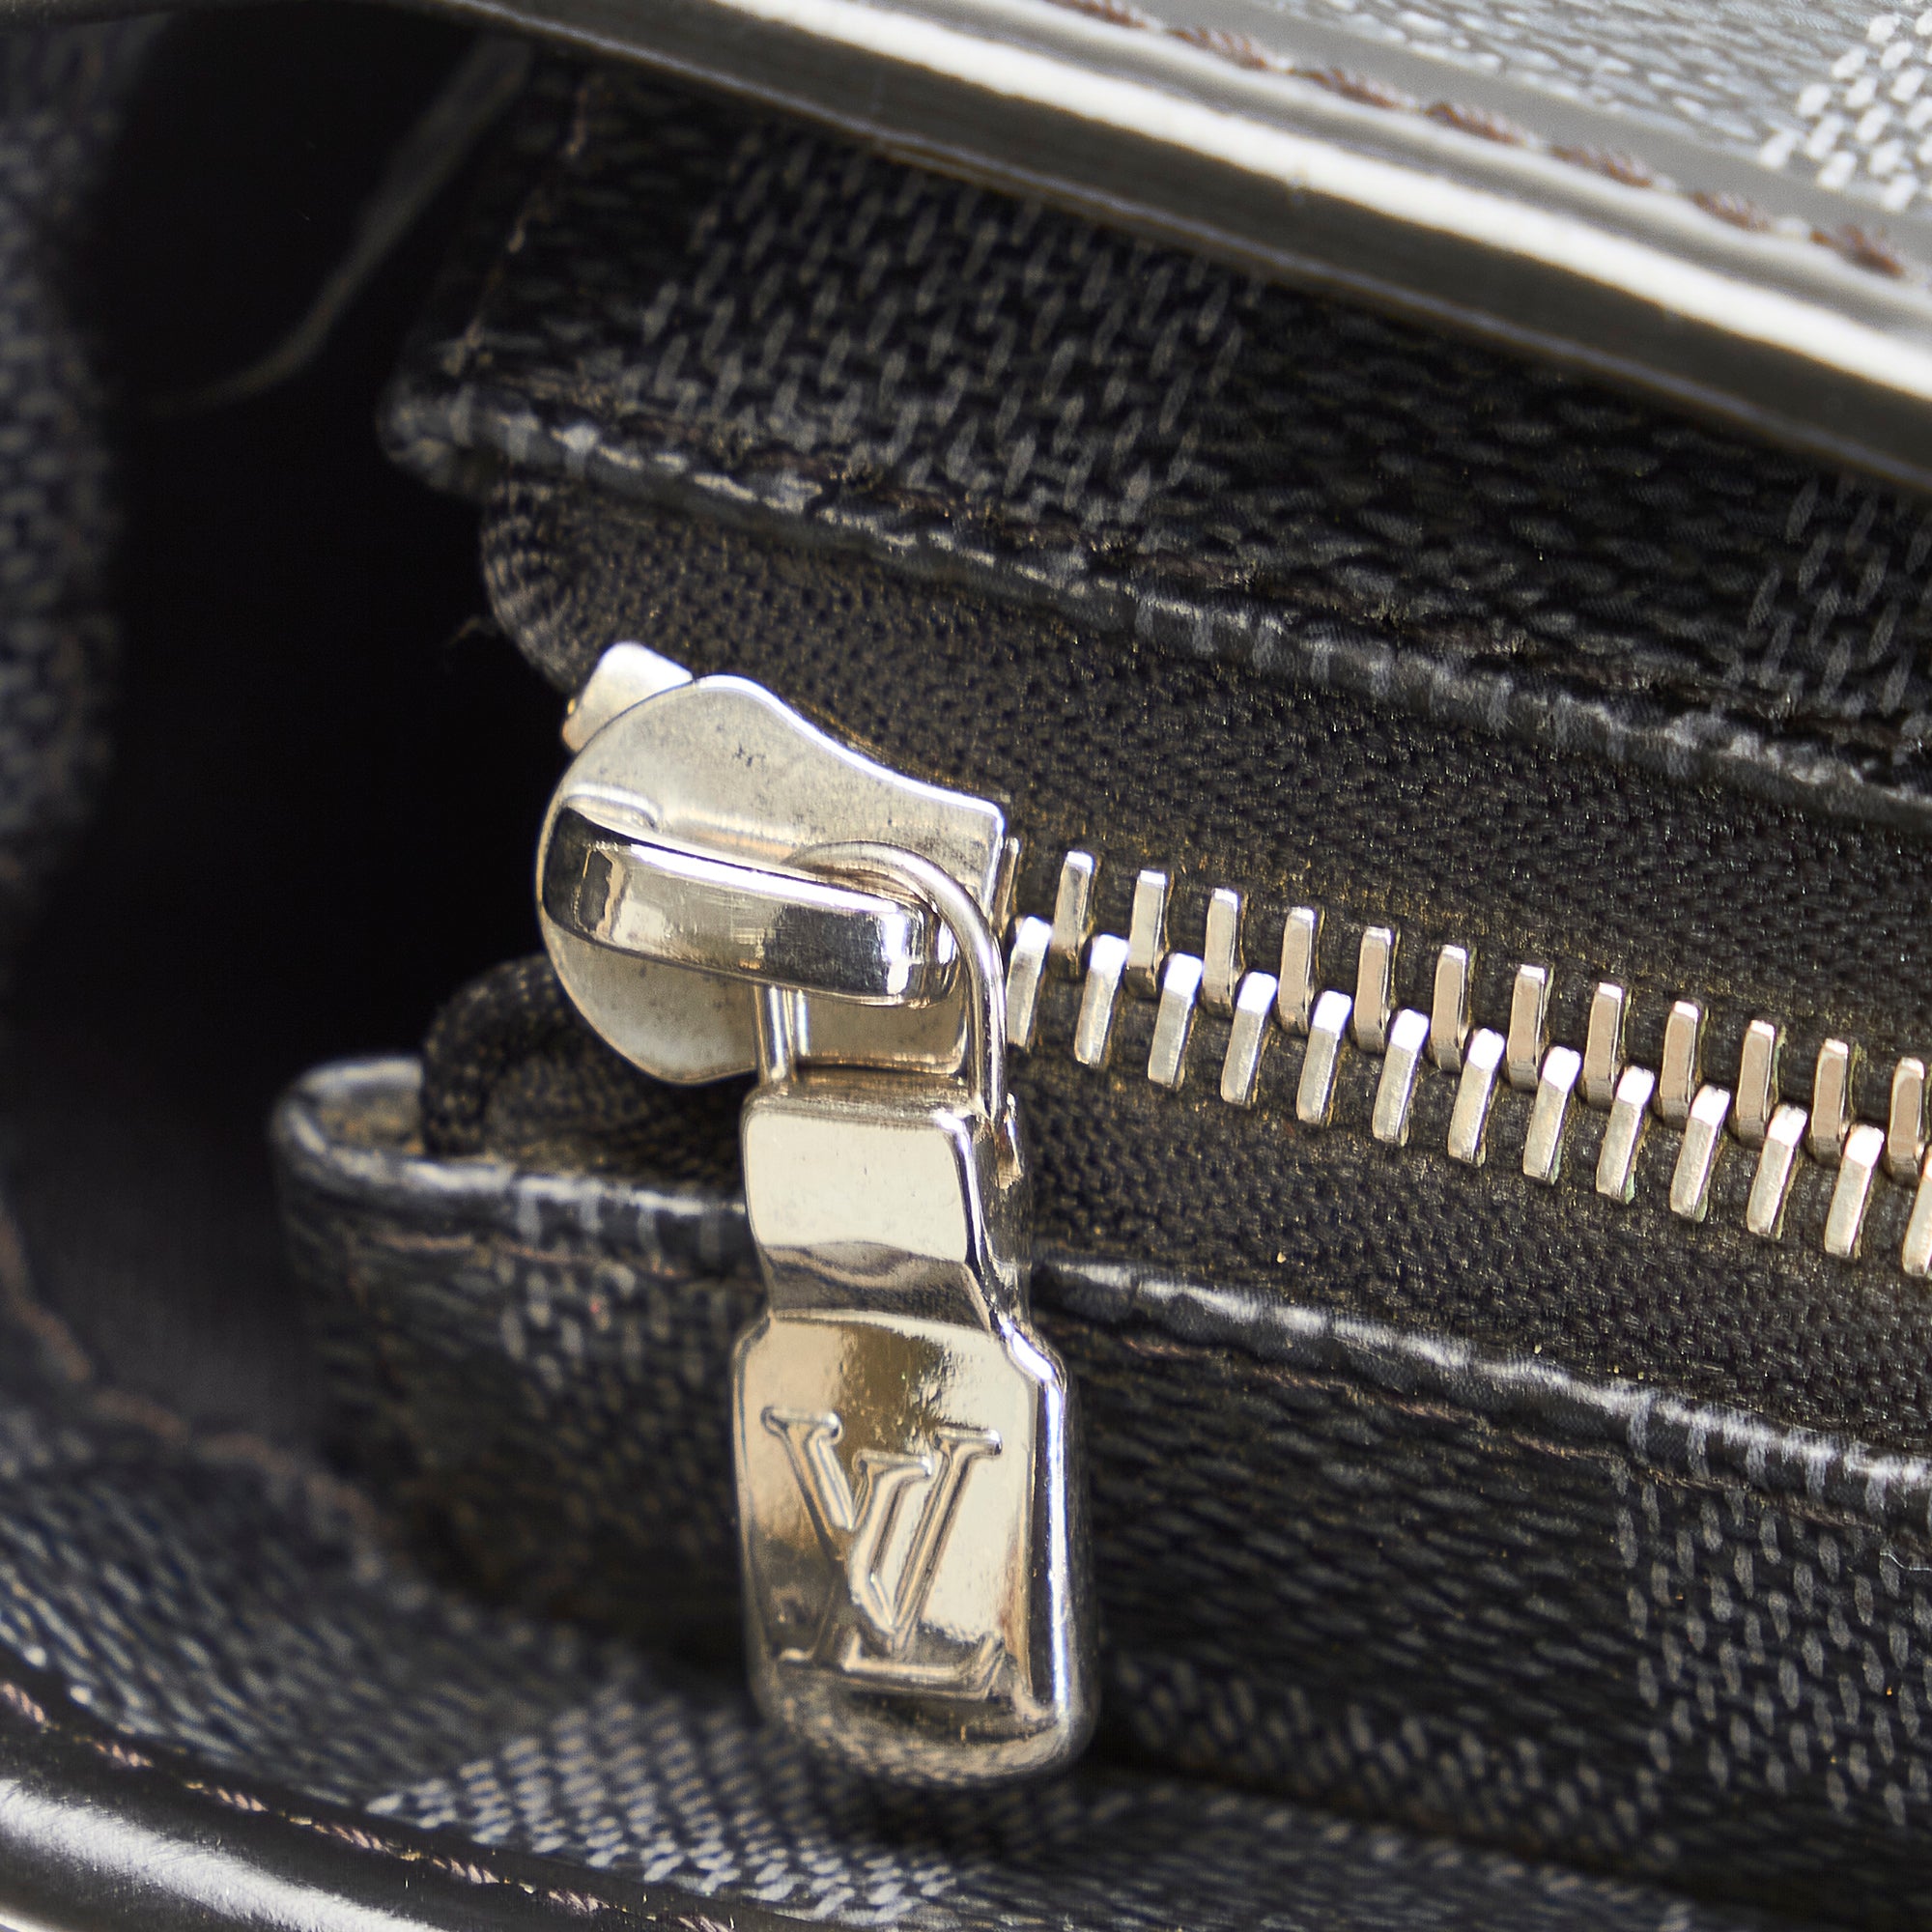 Louis Vuitton Damier Graphite Tadao PM N41259 Briefcase #11314